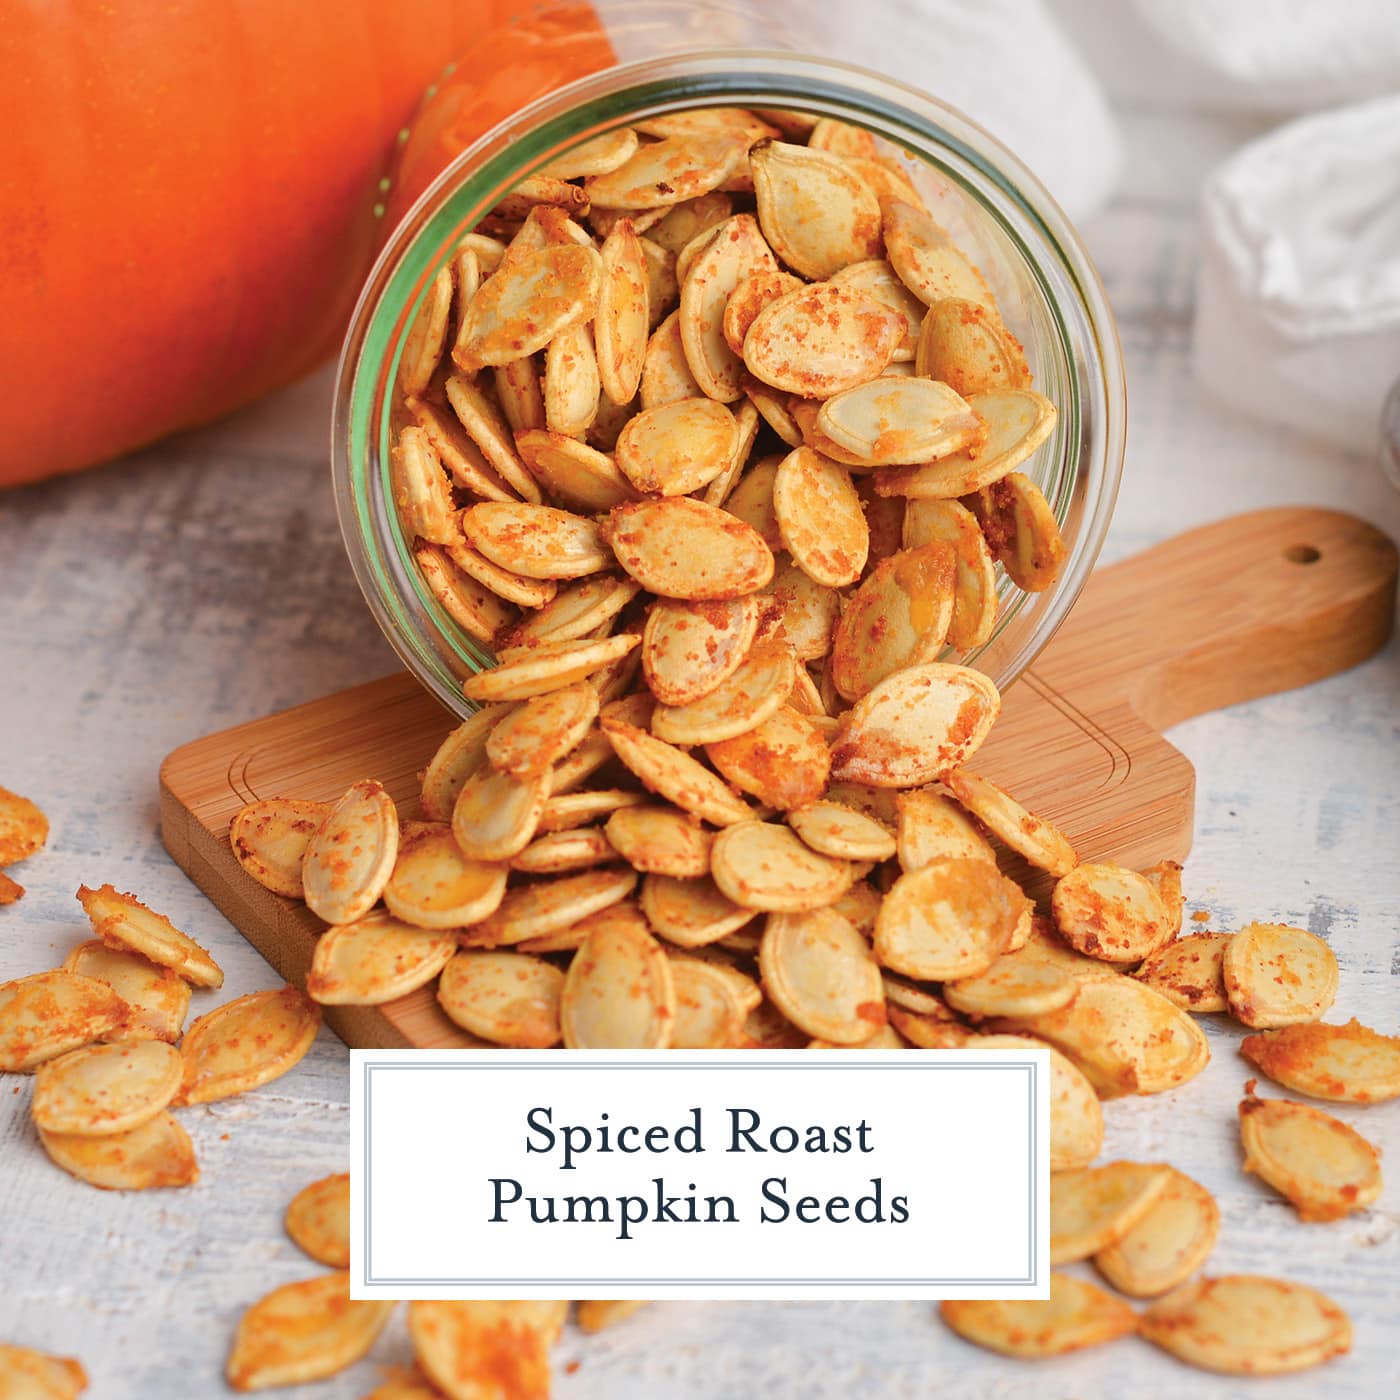 roast pumpkin seeds recipe with text overlay